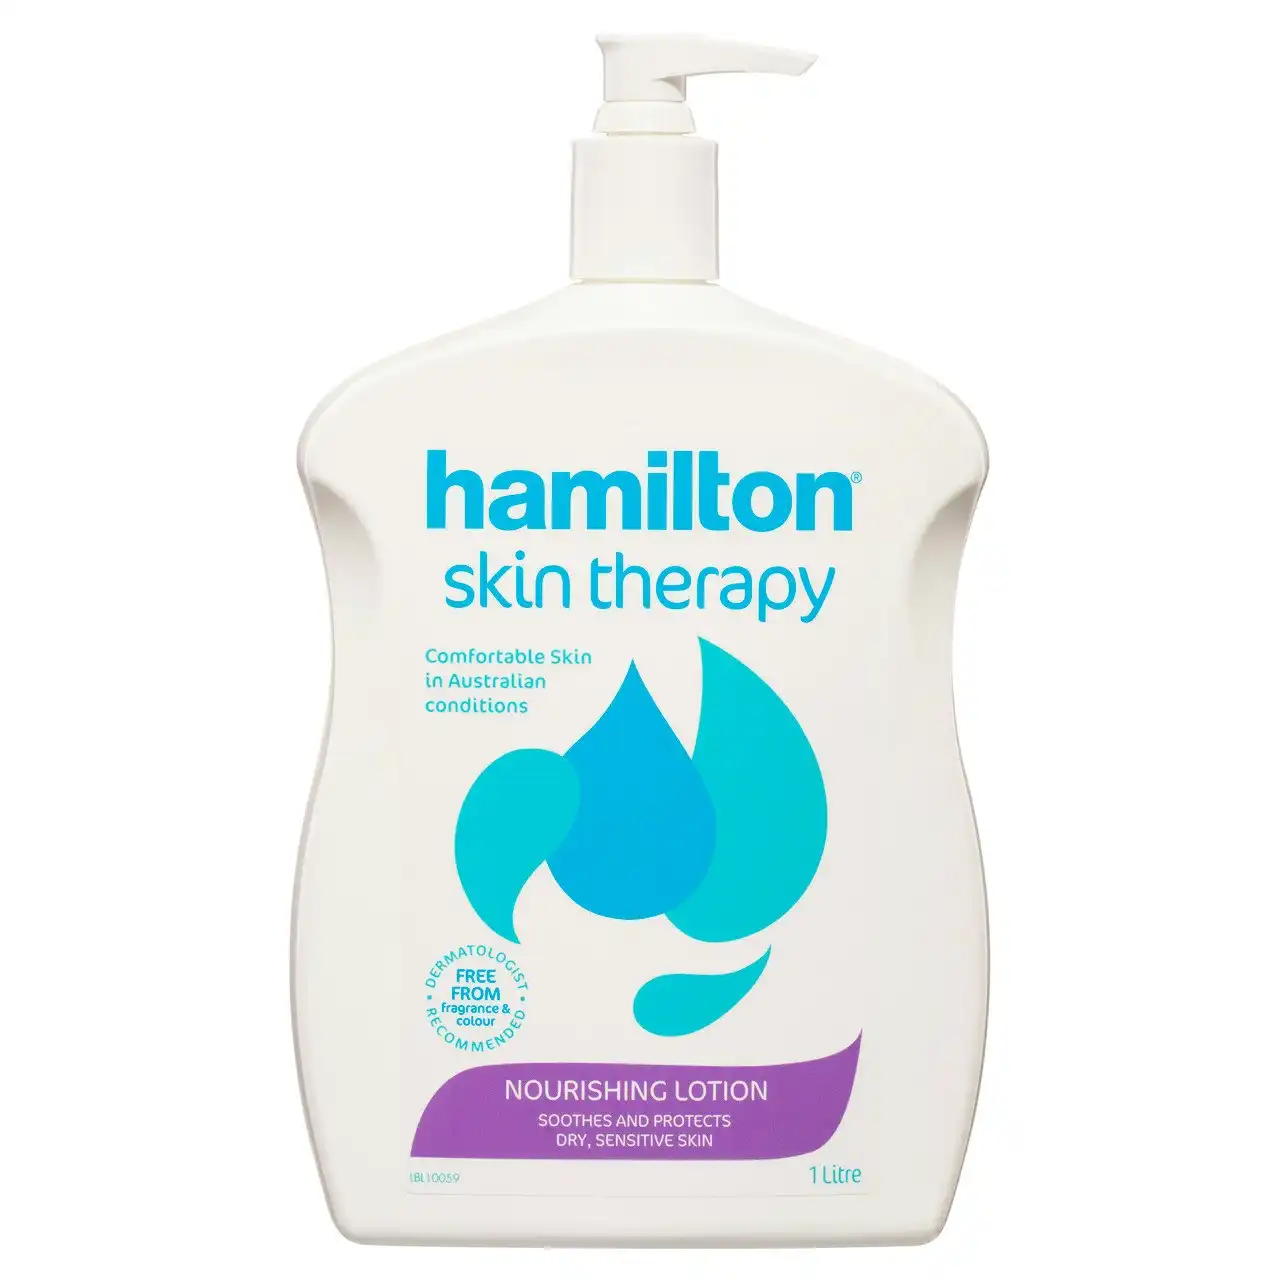 Hamilton(R) Skin Therapy Nourishing Lotion 1ltr